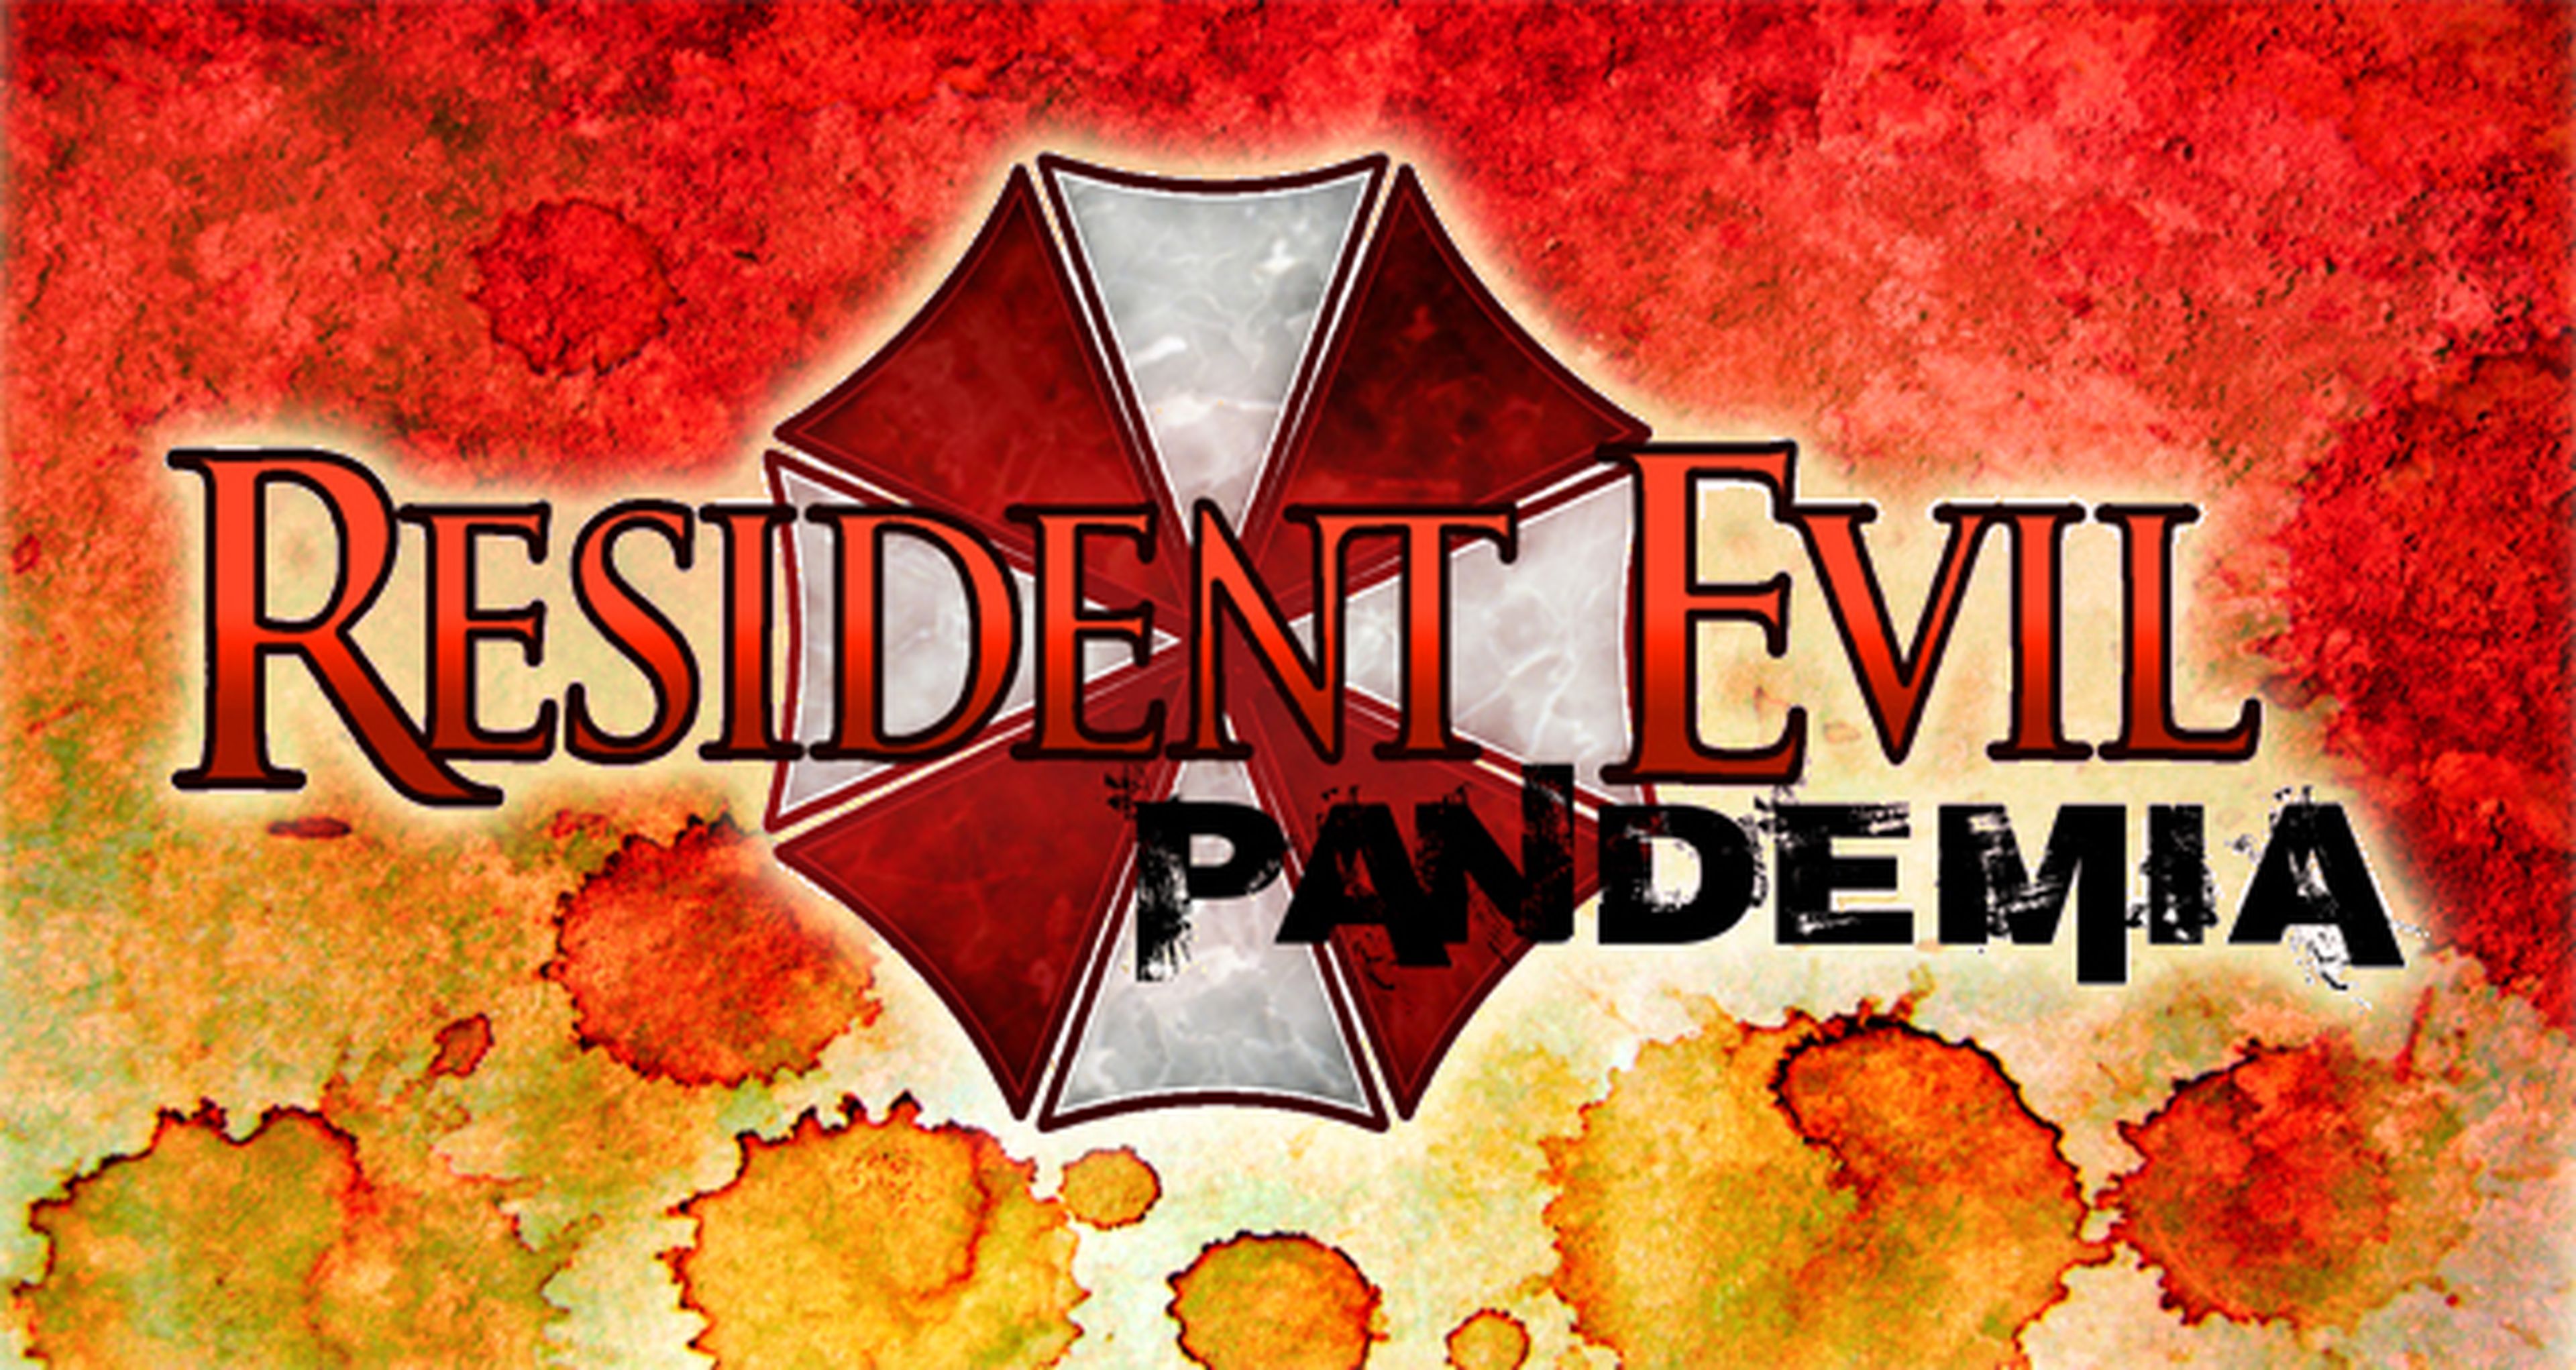 Se acerca Resident Evil Pandemia